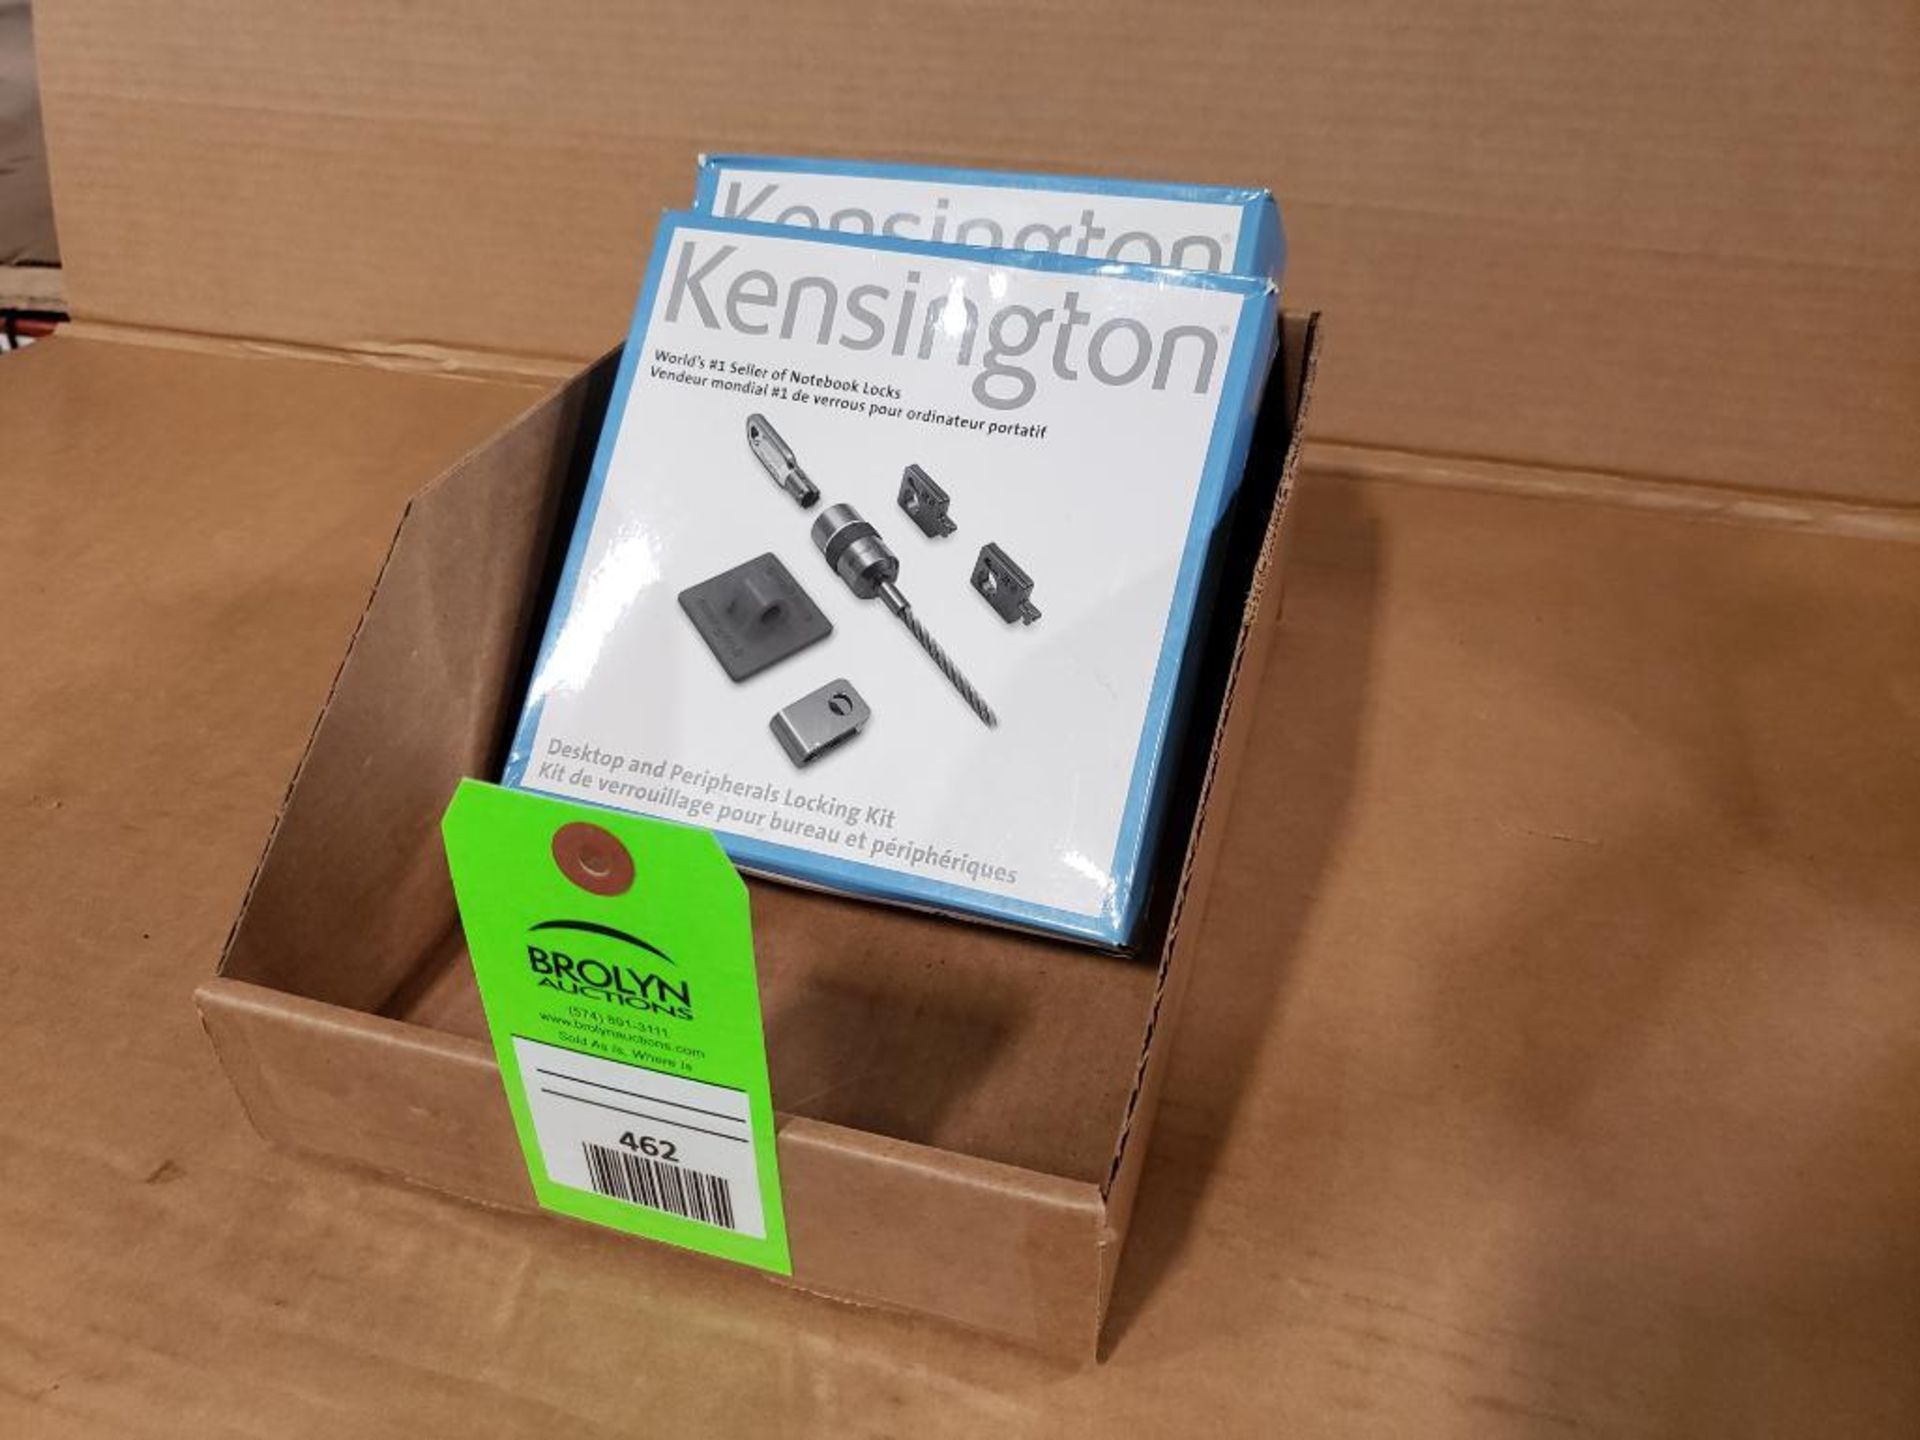 Qty 2 - Kensington notebook lock kits. New in box. - Image 7 of 7